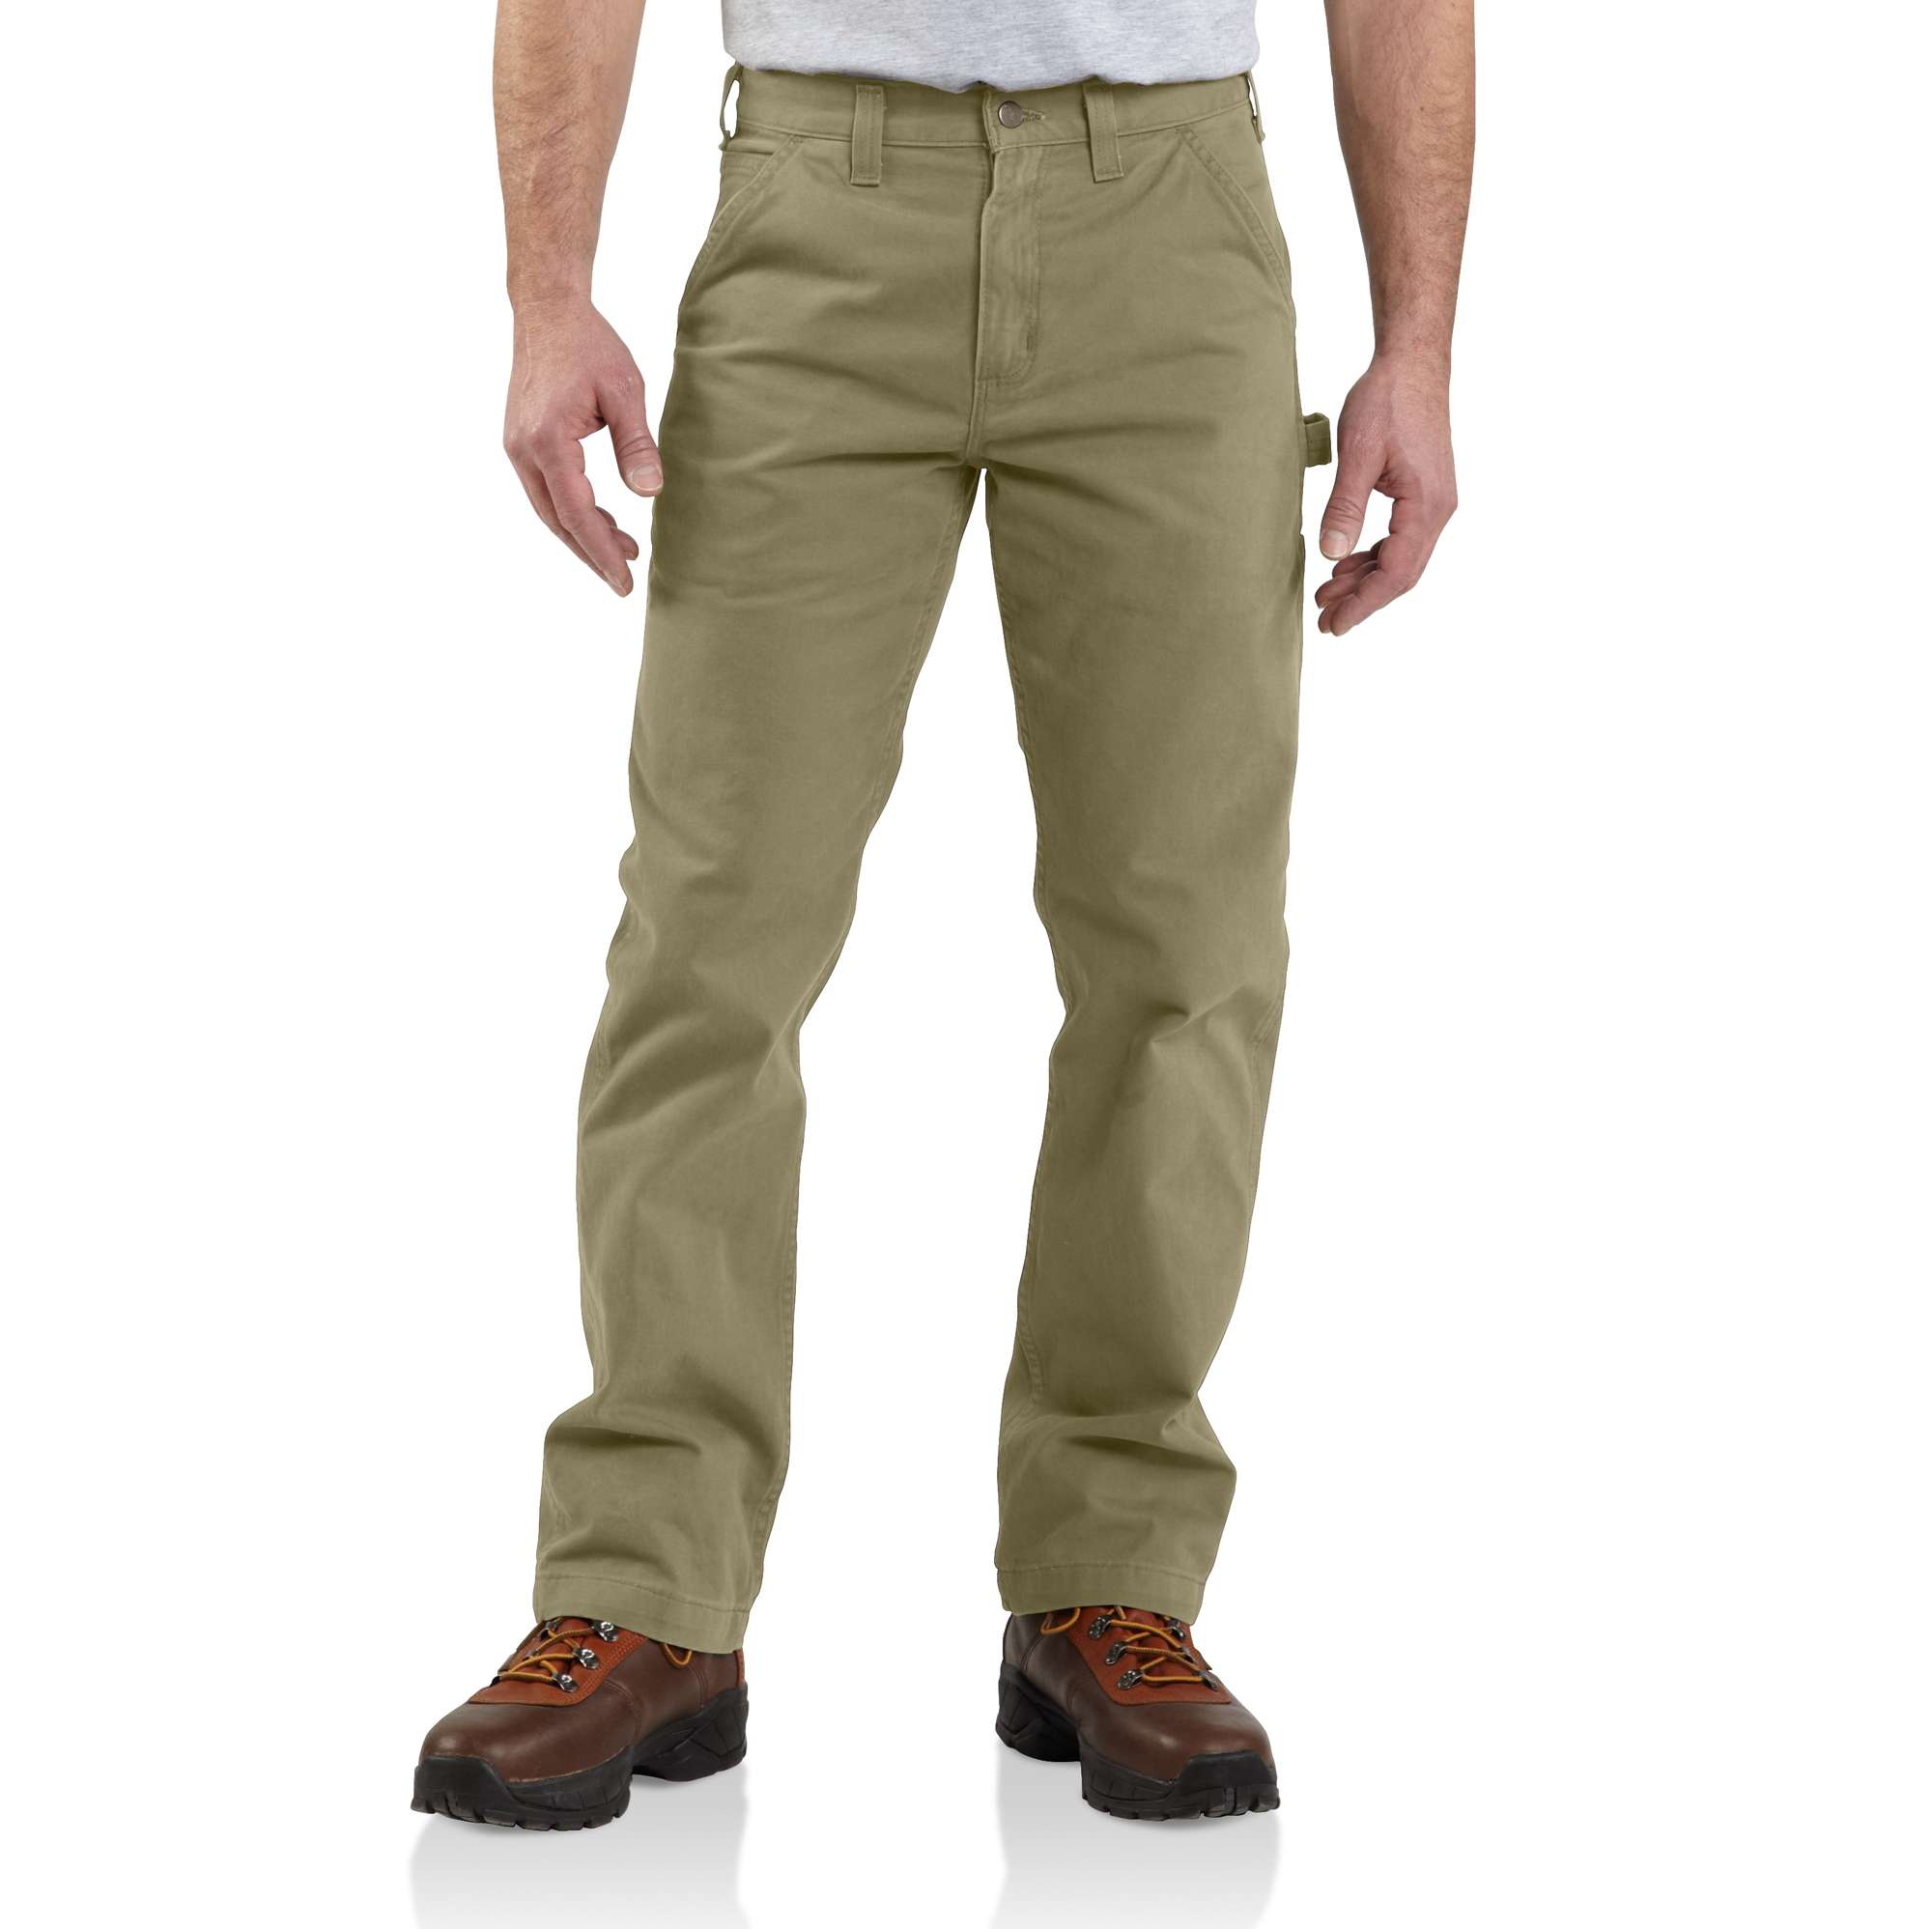 CARHARTT Dungaree Work Pants: Men's, Work Pants, ( 32 in x 32 in ), Blue,  Cotton, Buttons, Zipper